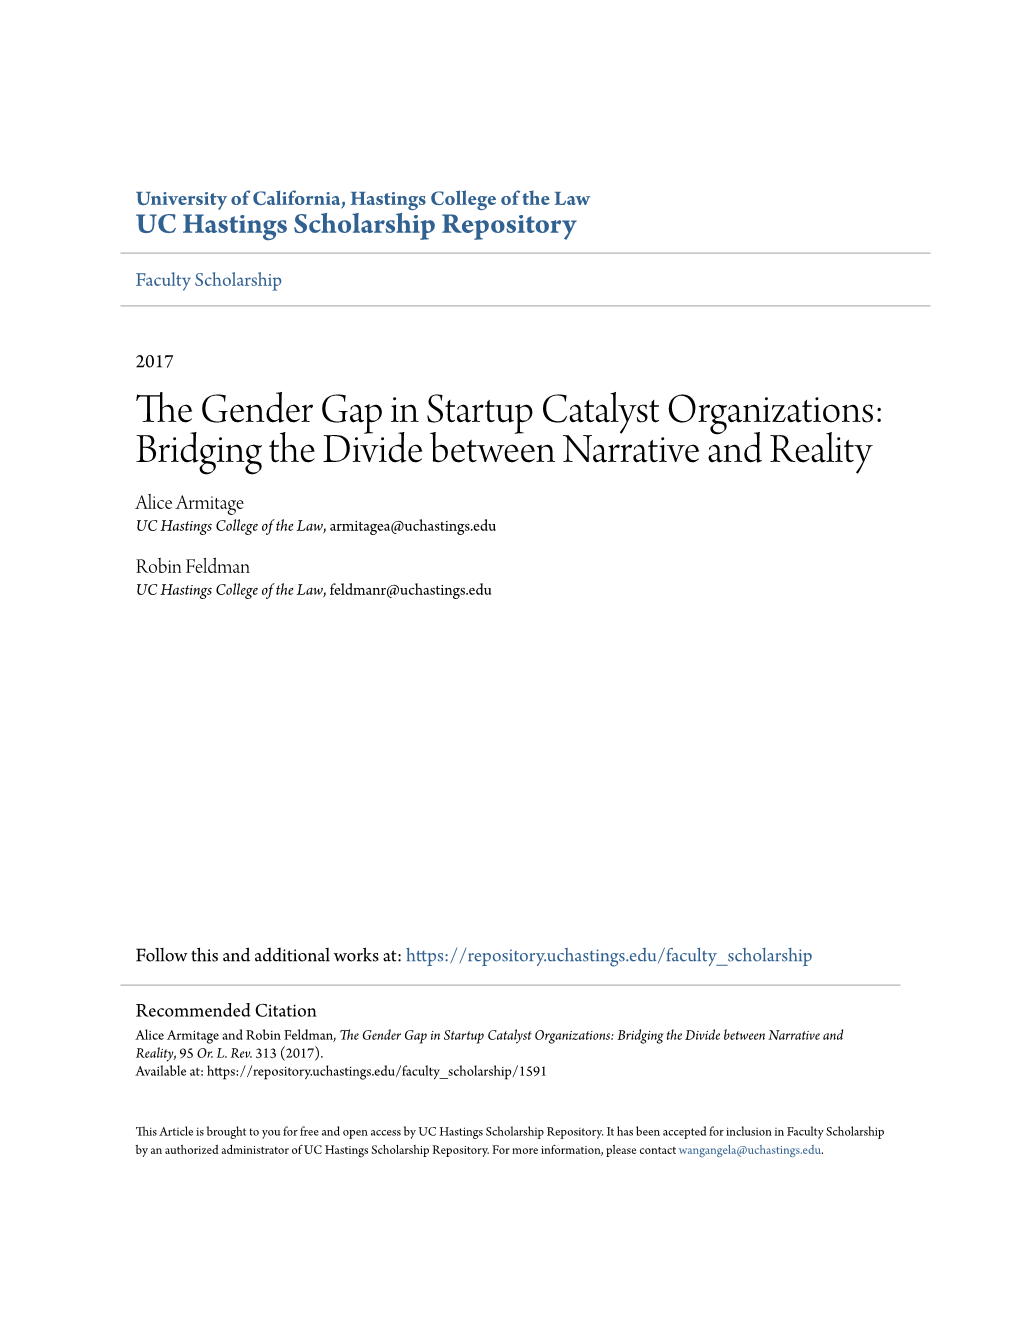 The Gender Gap in Startup Catalyst Organizations